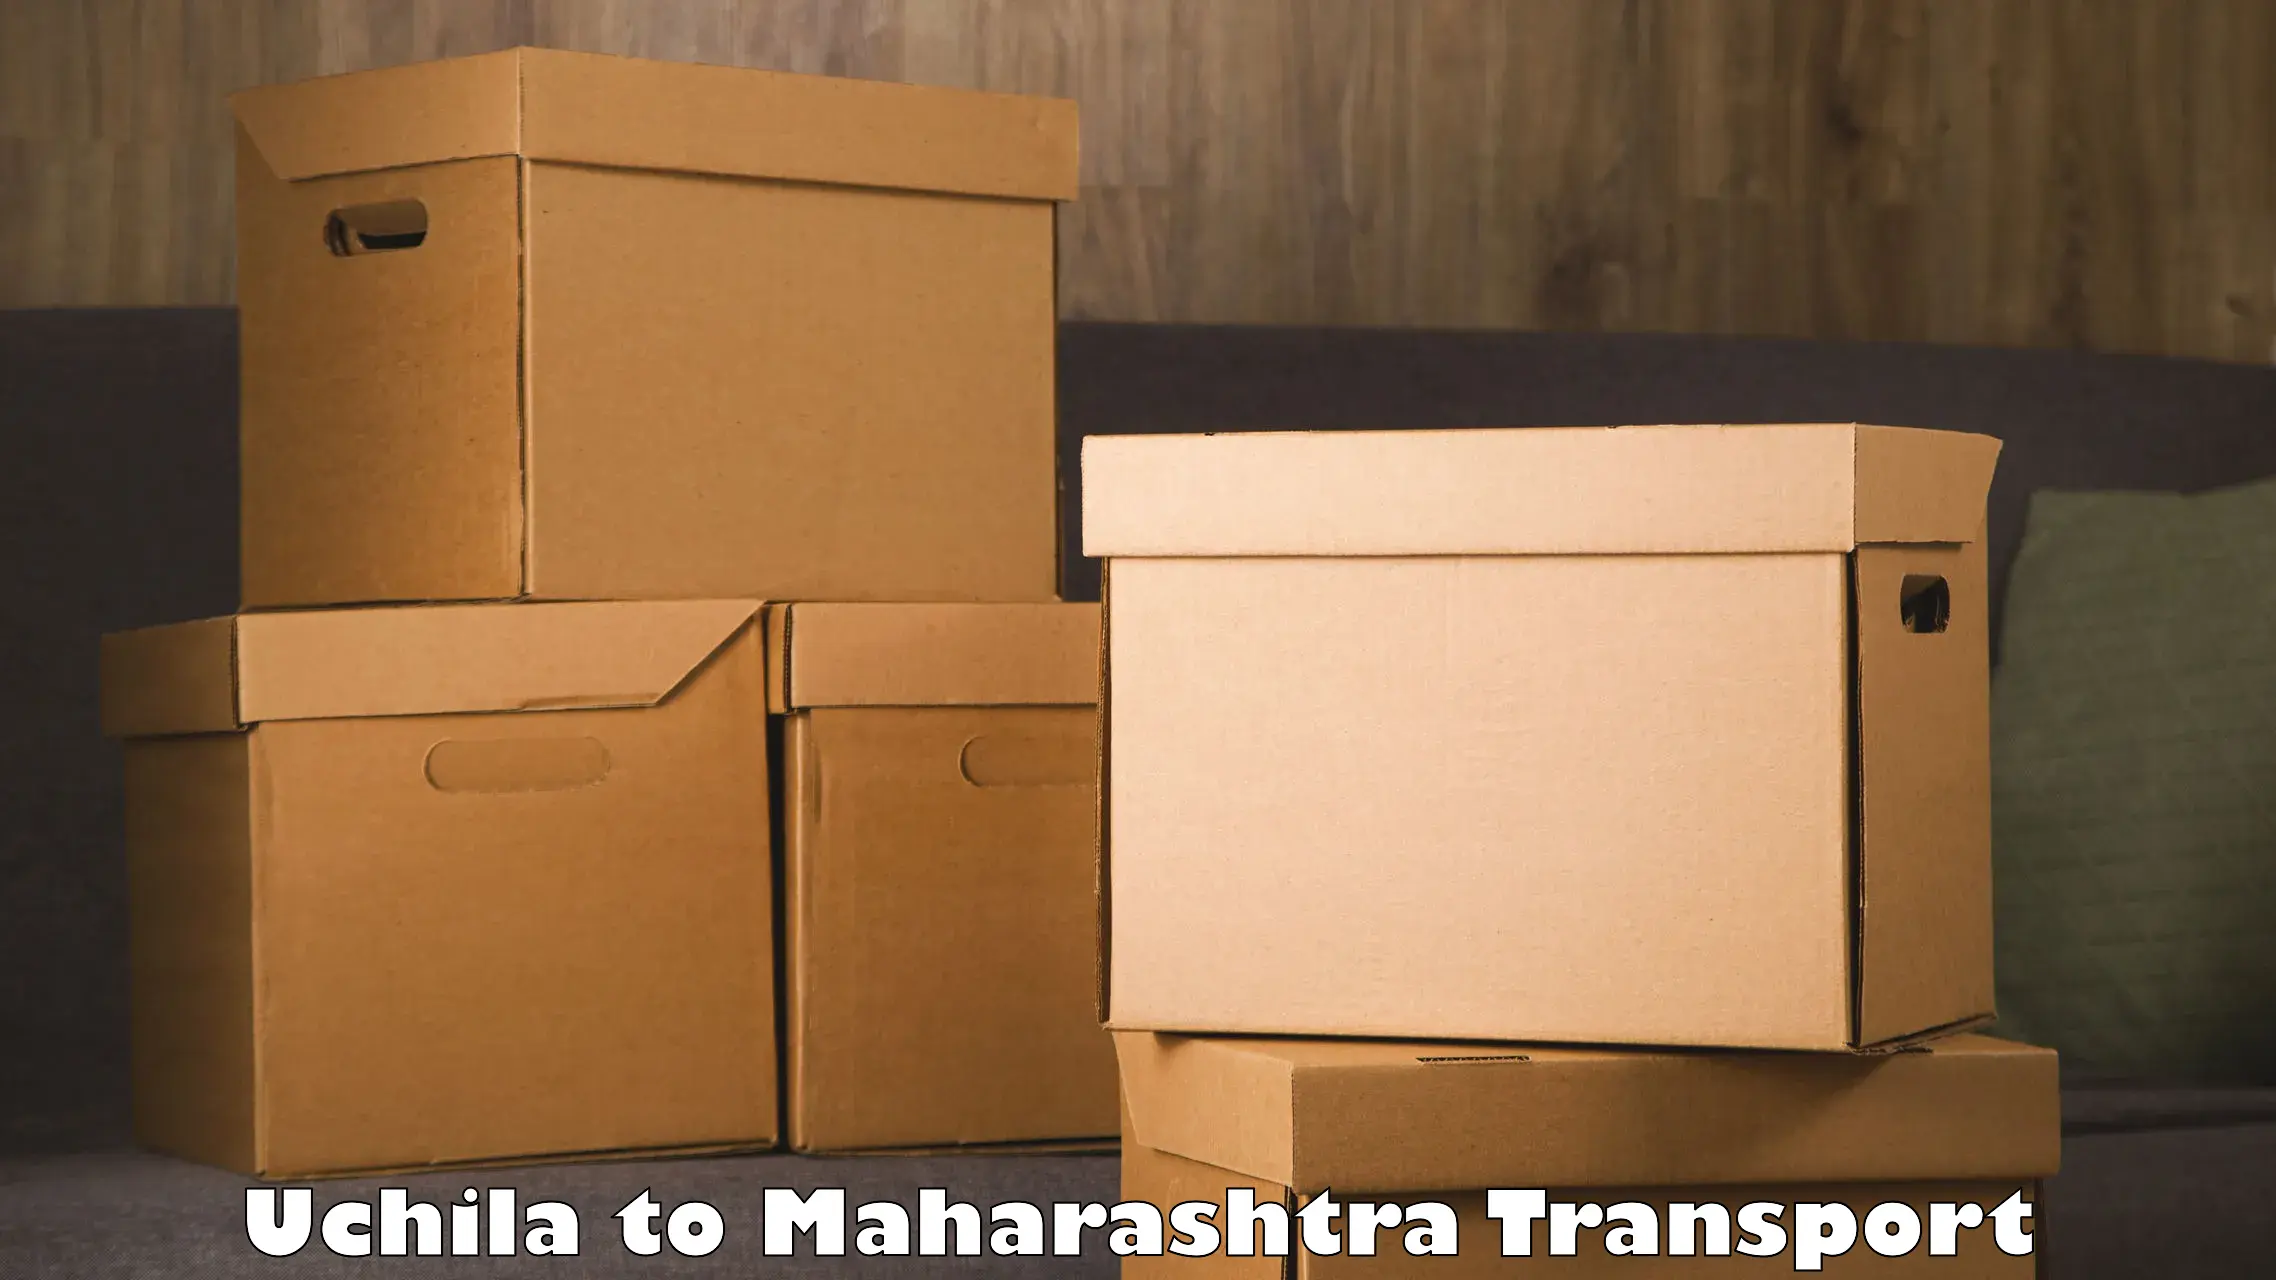 Container transport service Uchila to Maharashtra